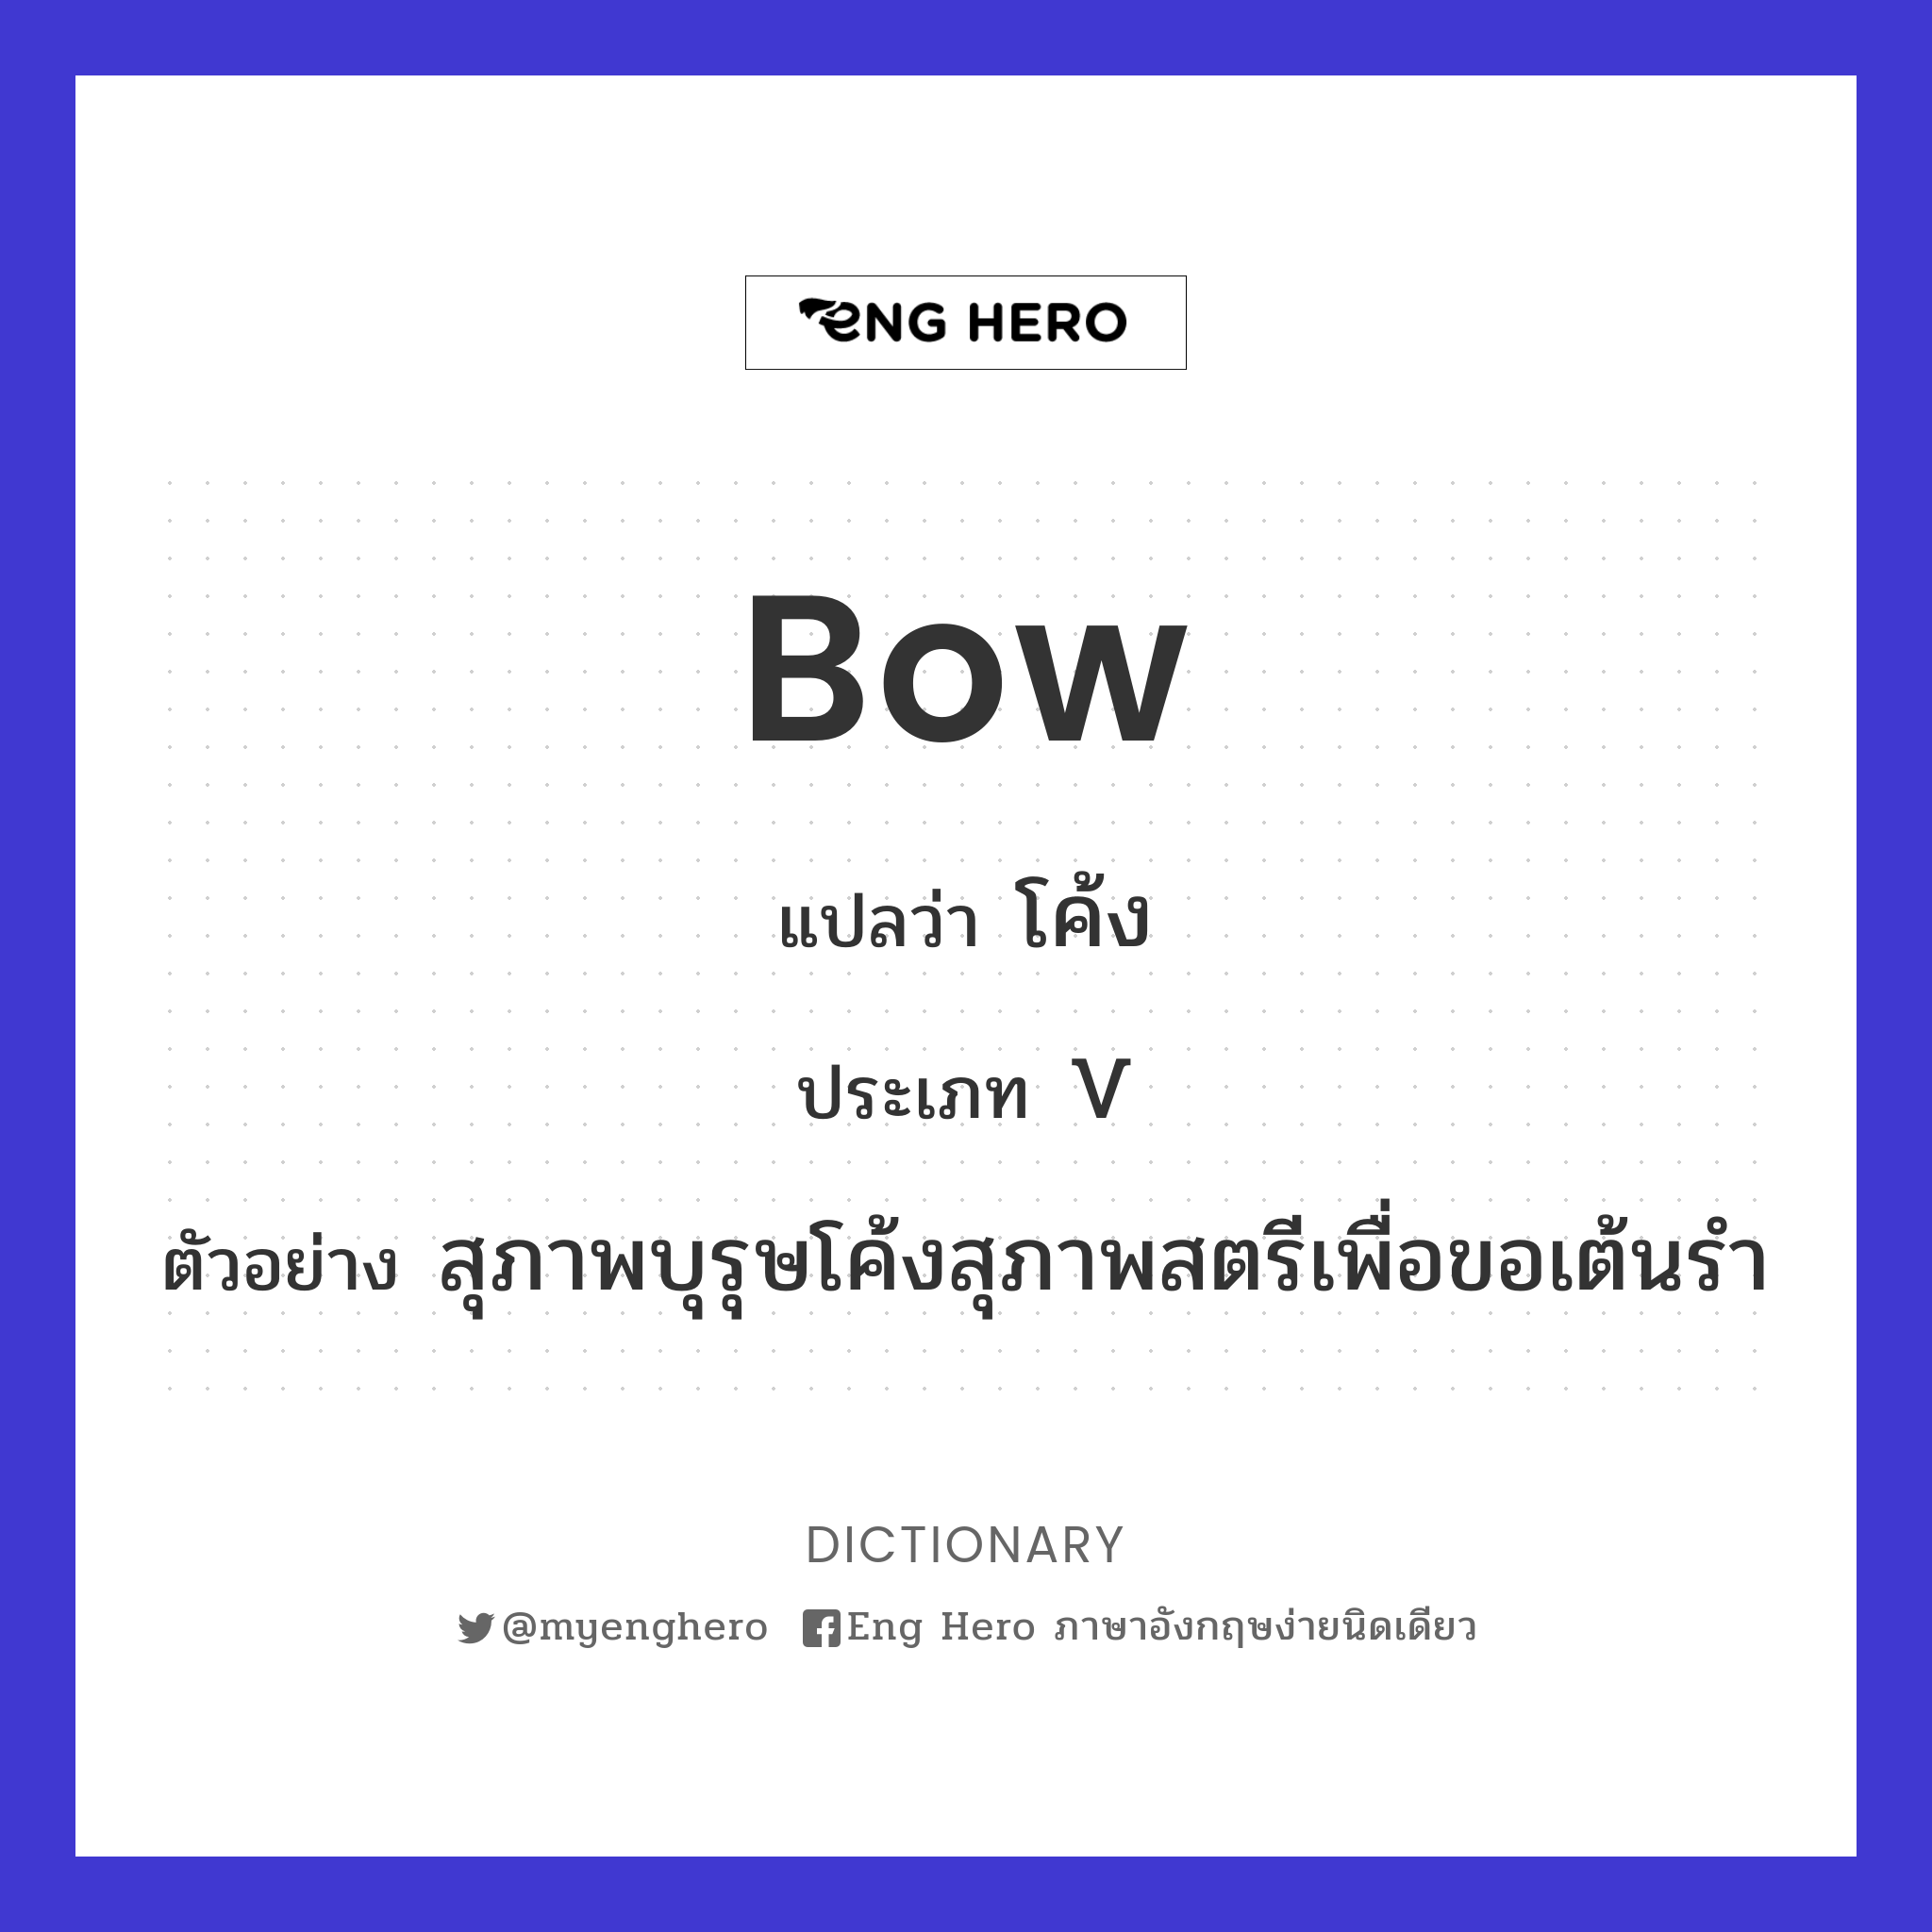 bow